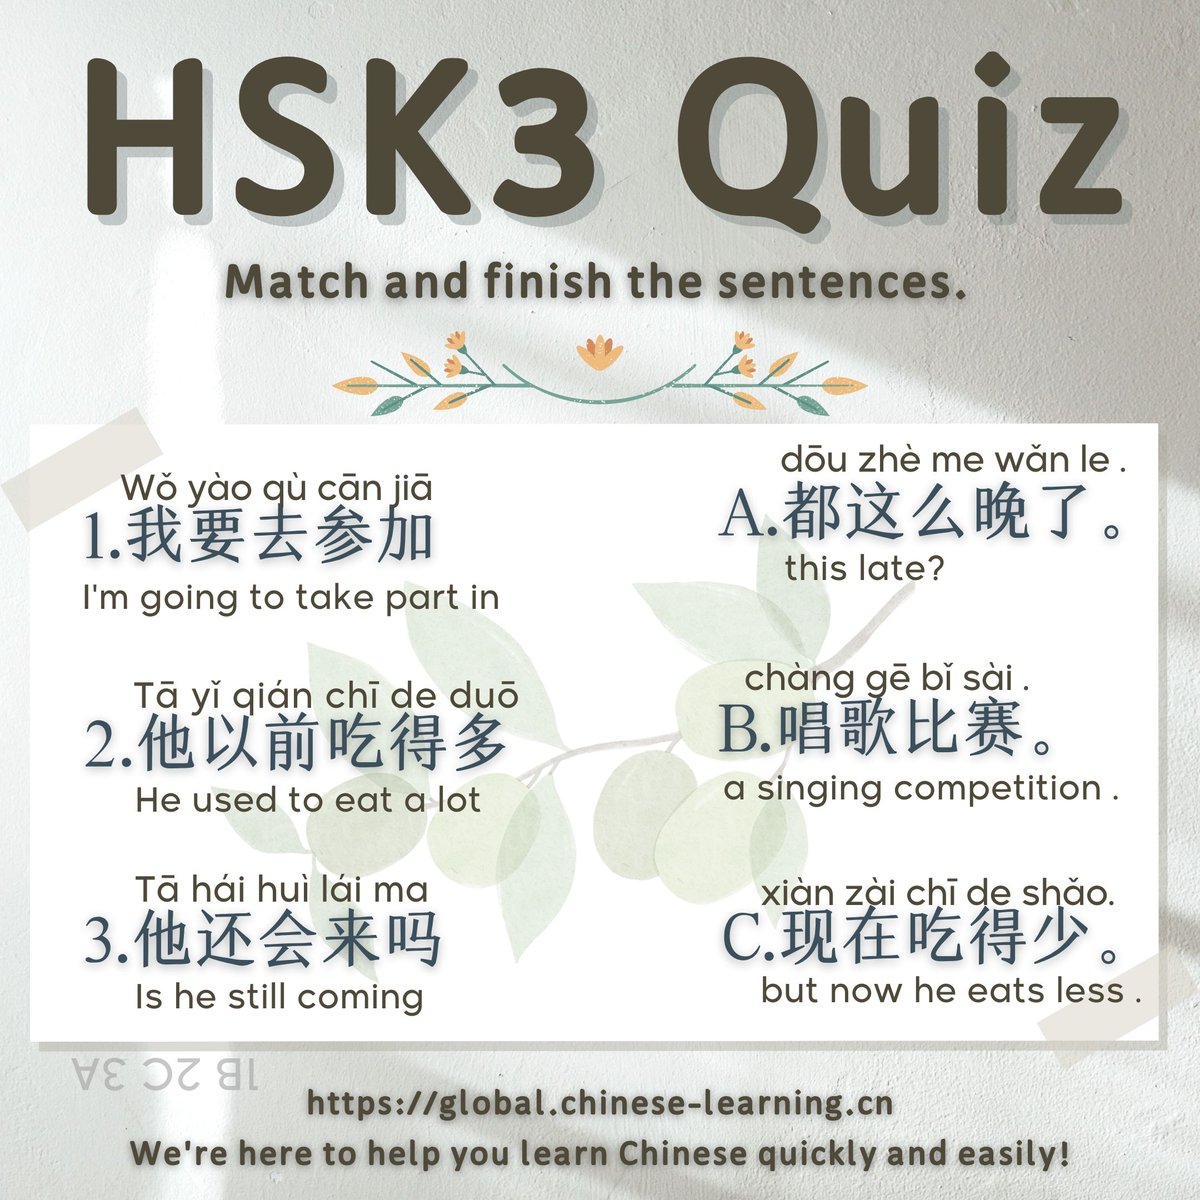 HSK3 Quiz Match and finish the sentences #学汉语 #learnchinese #mandarin #studytwt #Chineselearning #中文学习 #学中文 #汉语 #hsktest #Chinese #HSK